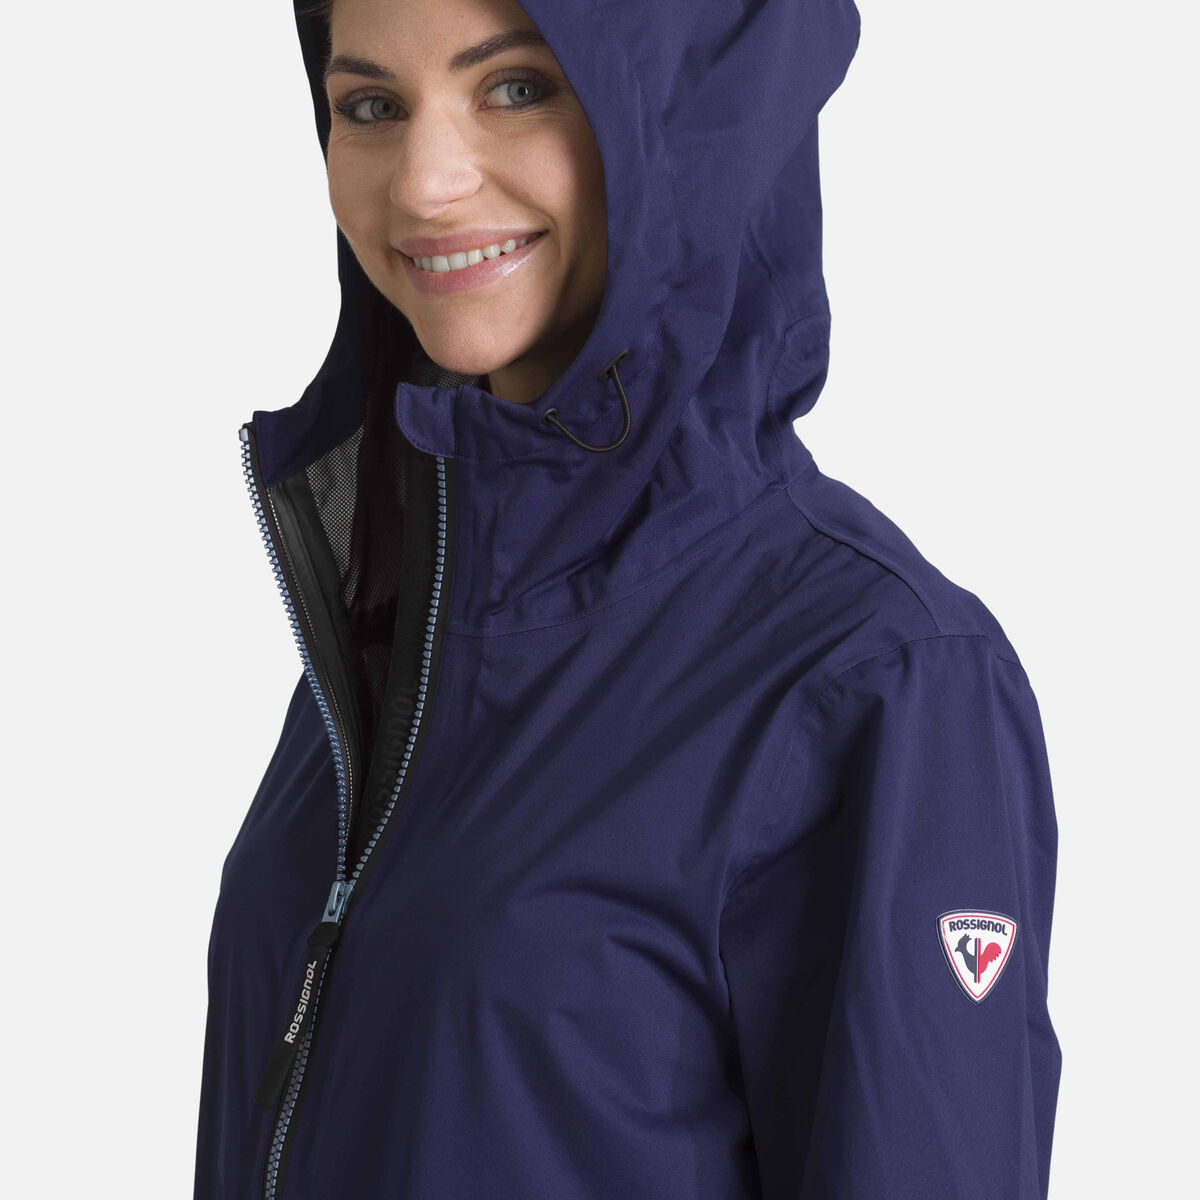 Women's Covariant Rain Jacket